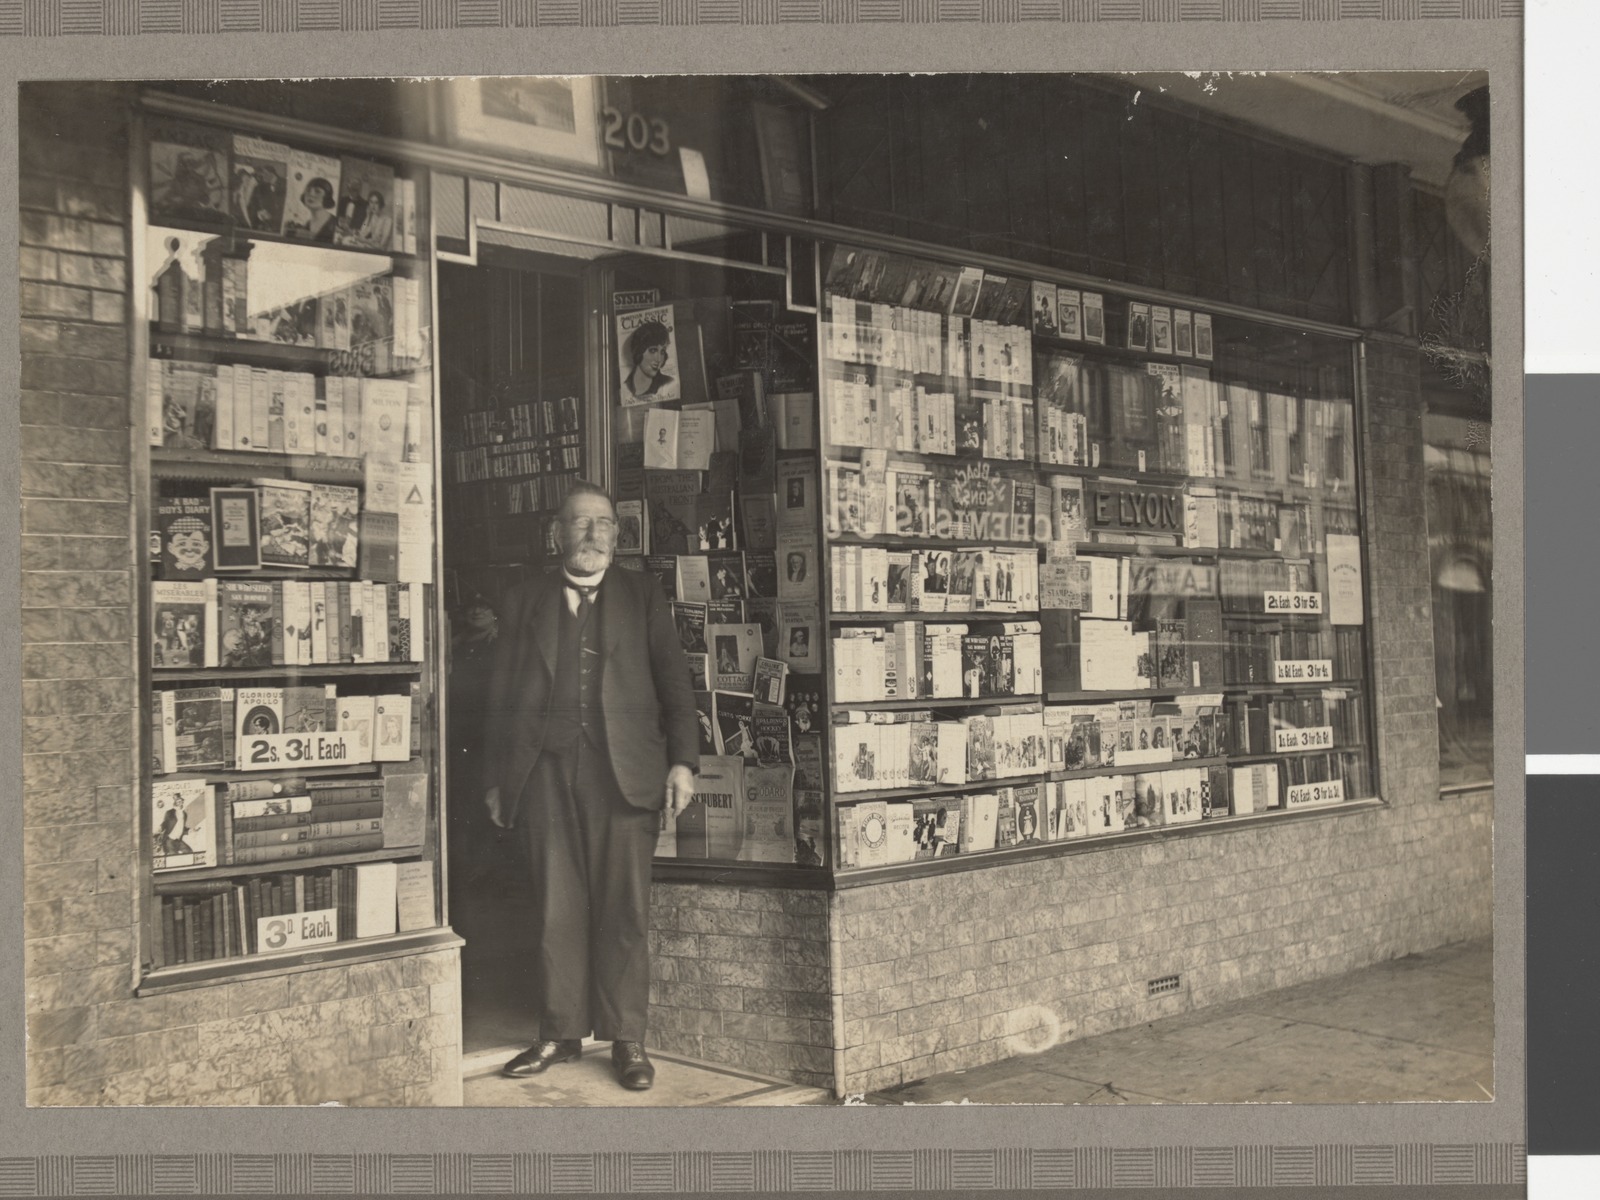 Edward Lyon, Bookseller, outside his premises, 203 Smith Street, Fitzroy